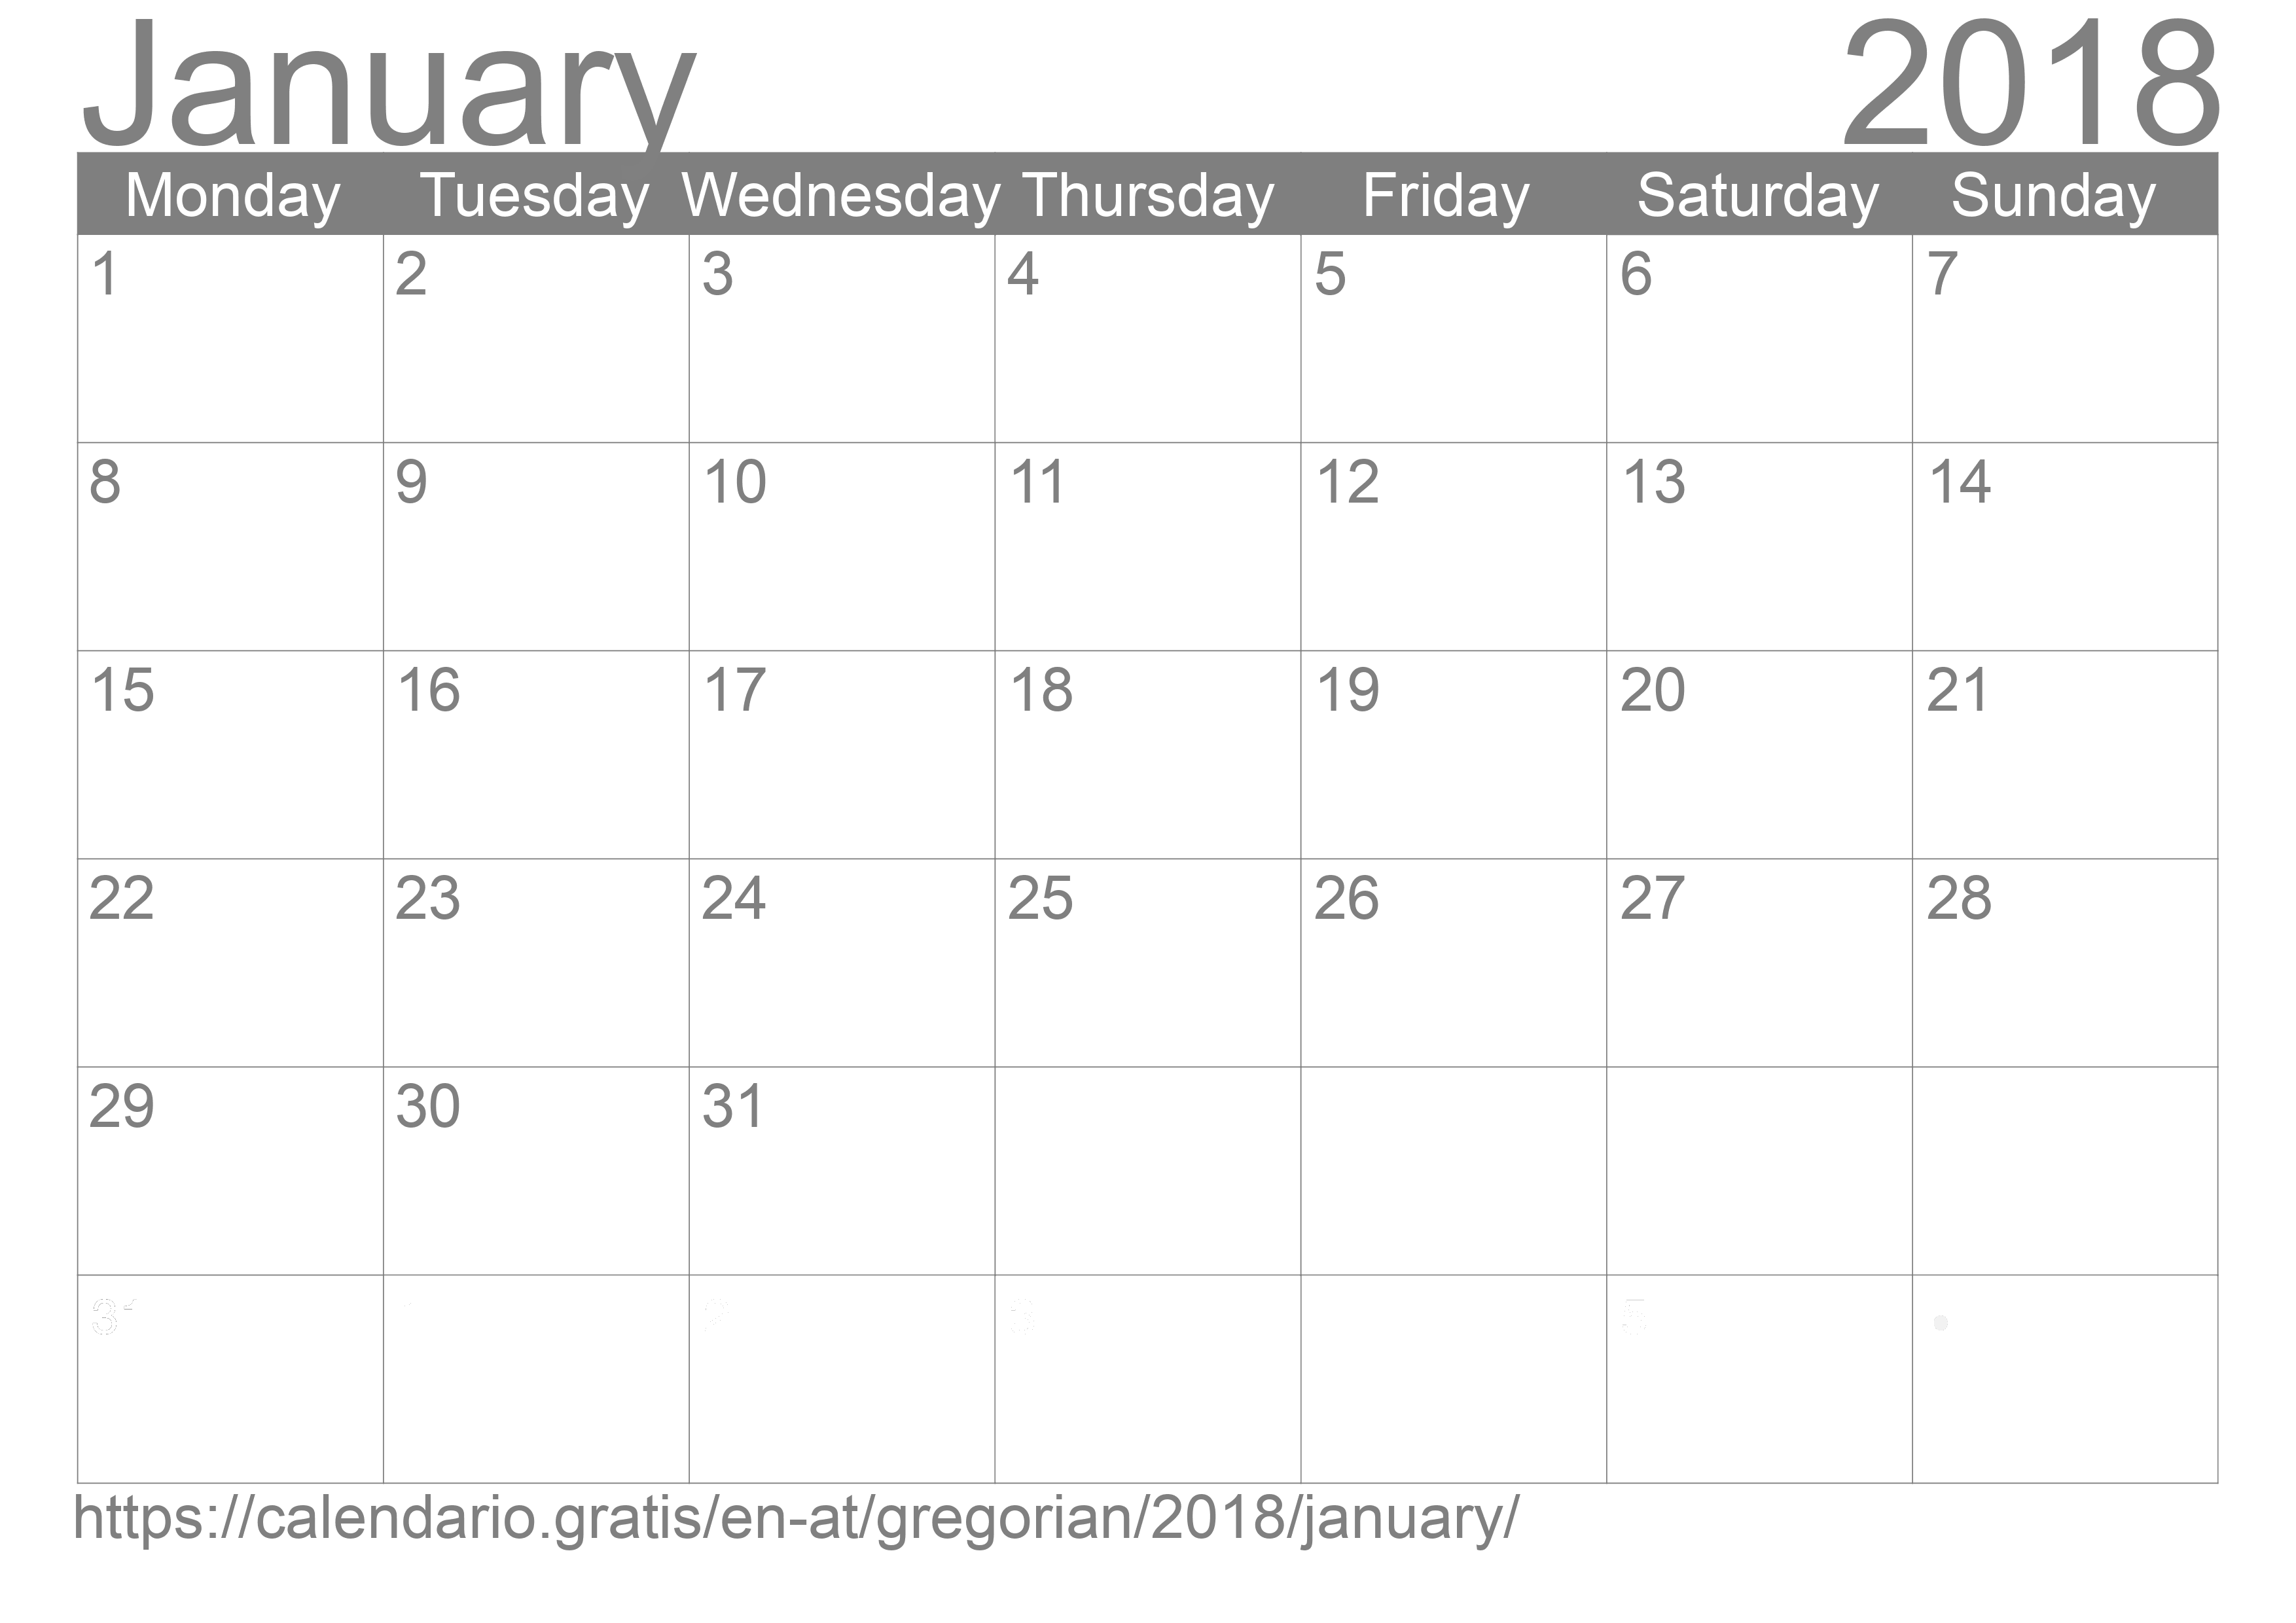 Calendar January 2018 to print